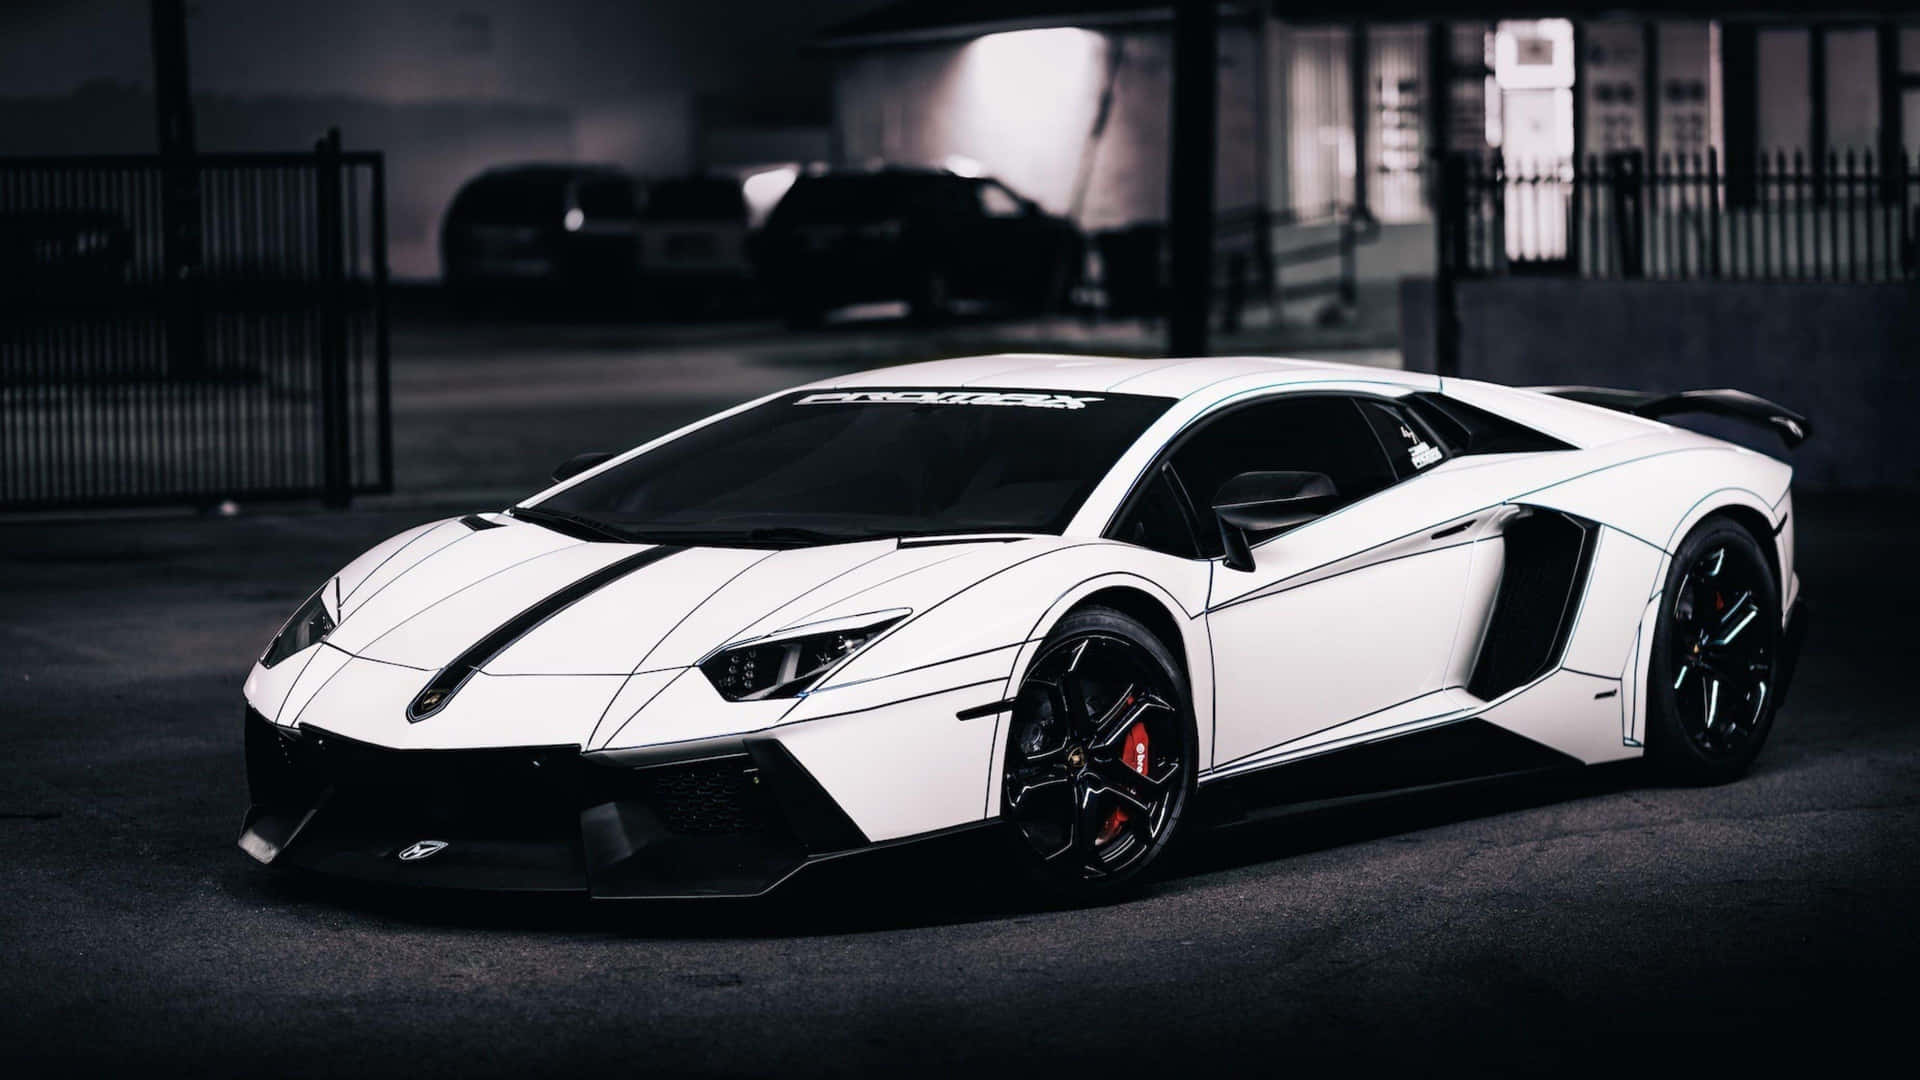 Enjoy the beauty of a stunning 4k Lamborghini